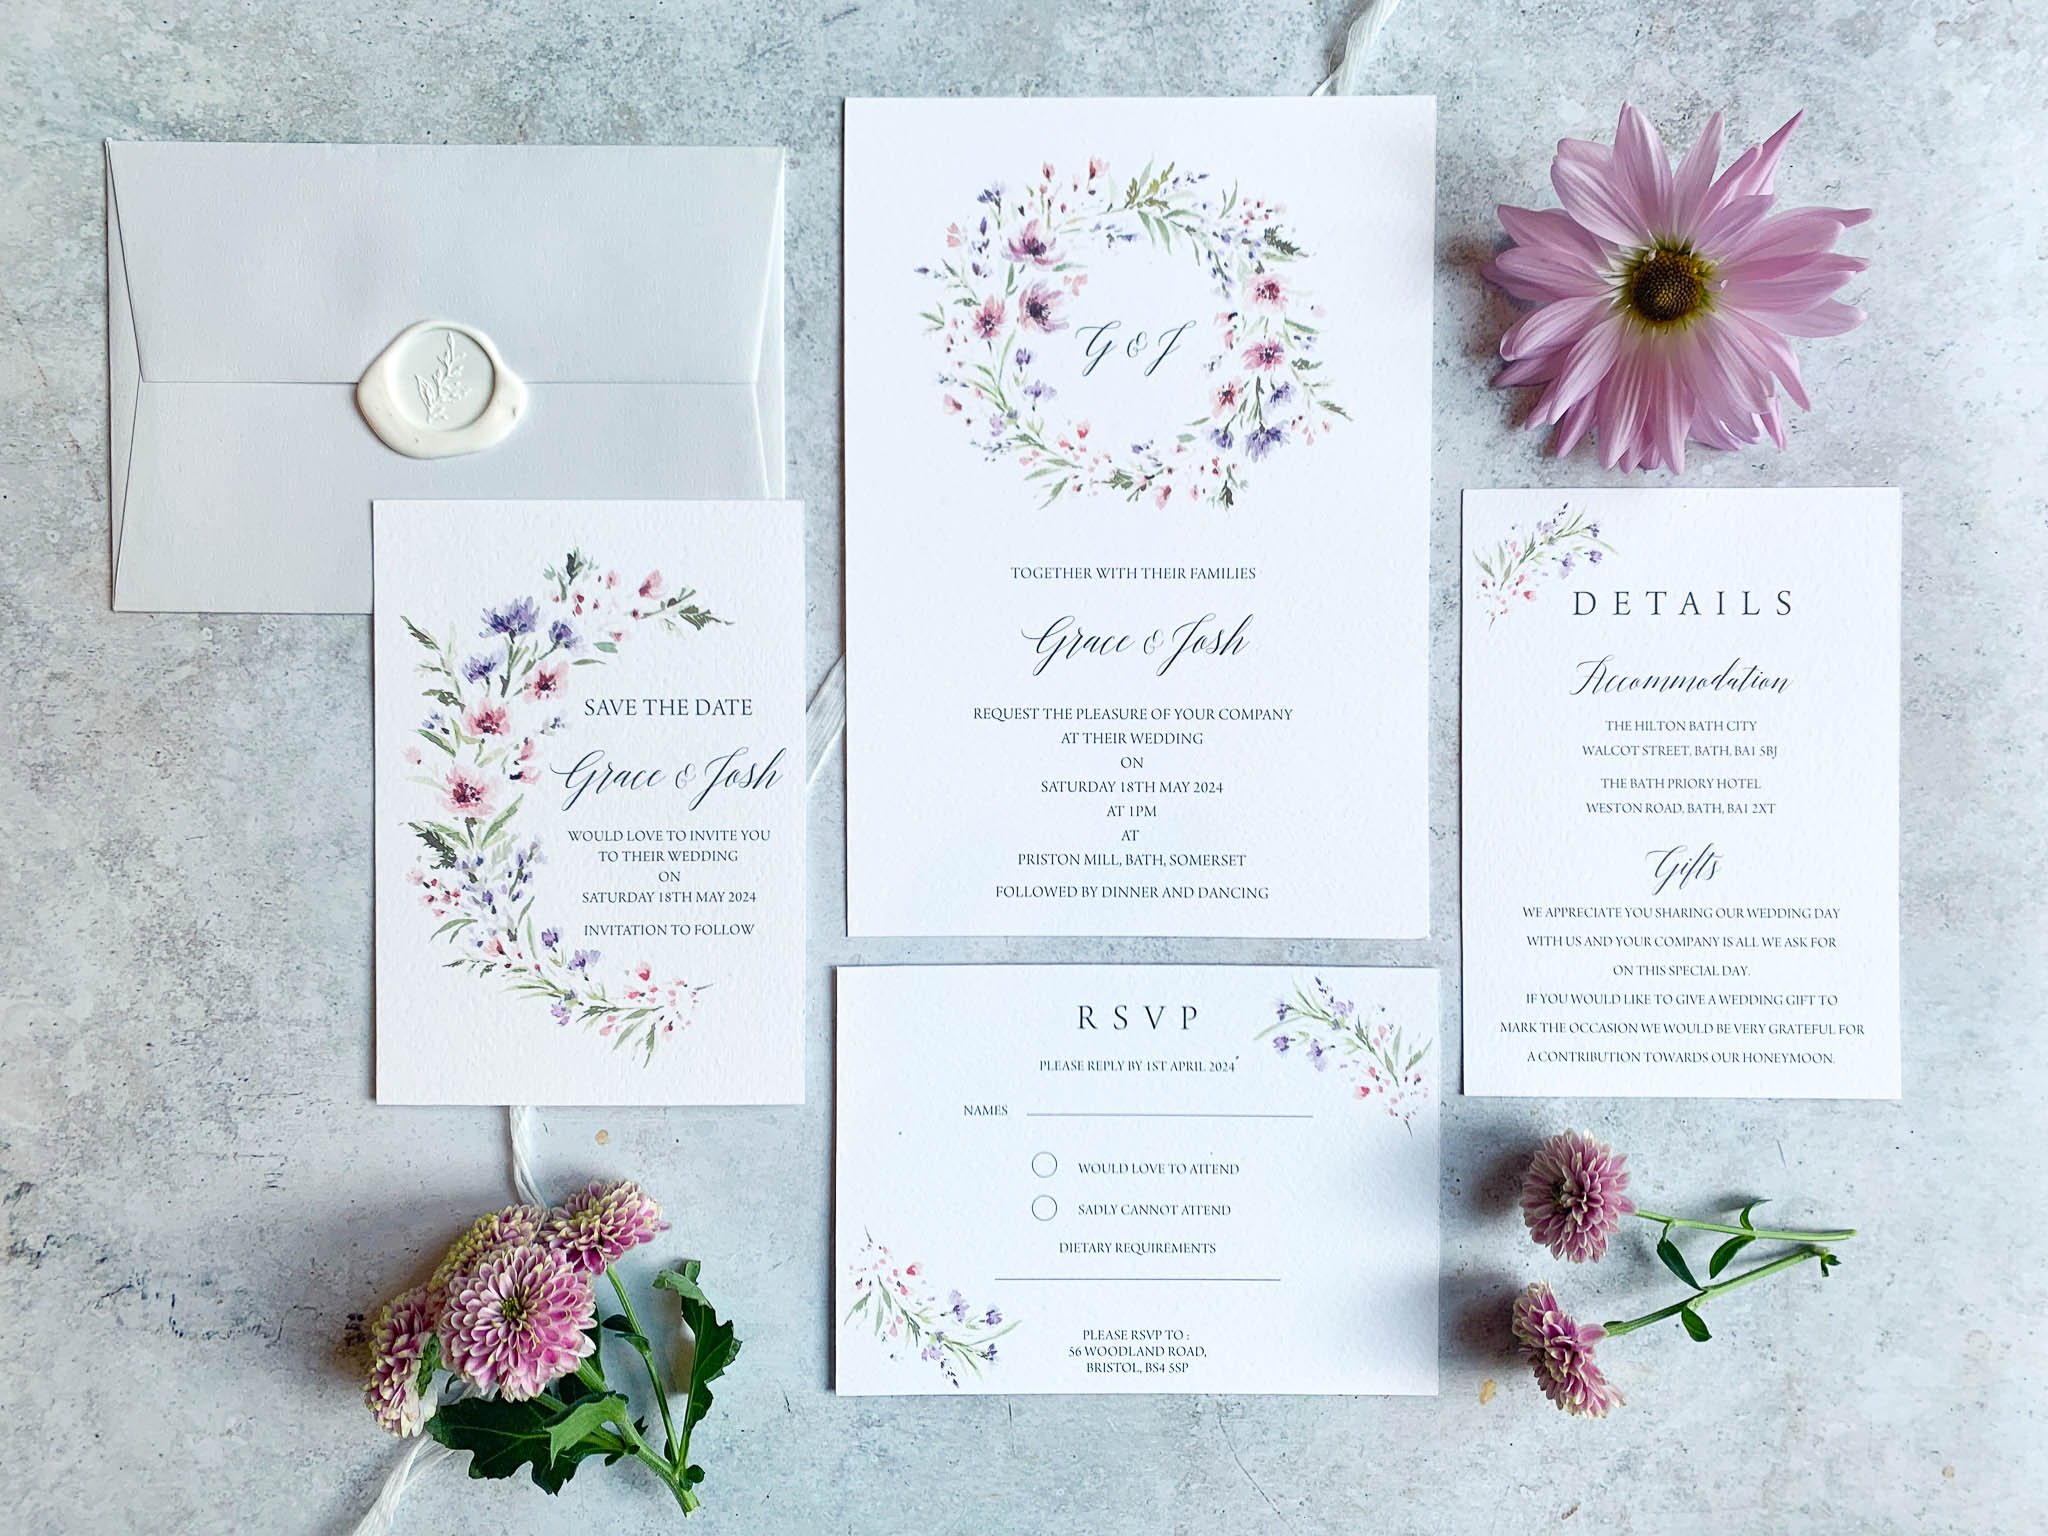 Wild flower wedding invitation flat lay copy.jpg